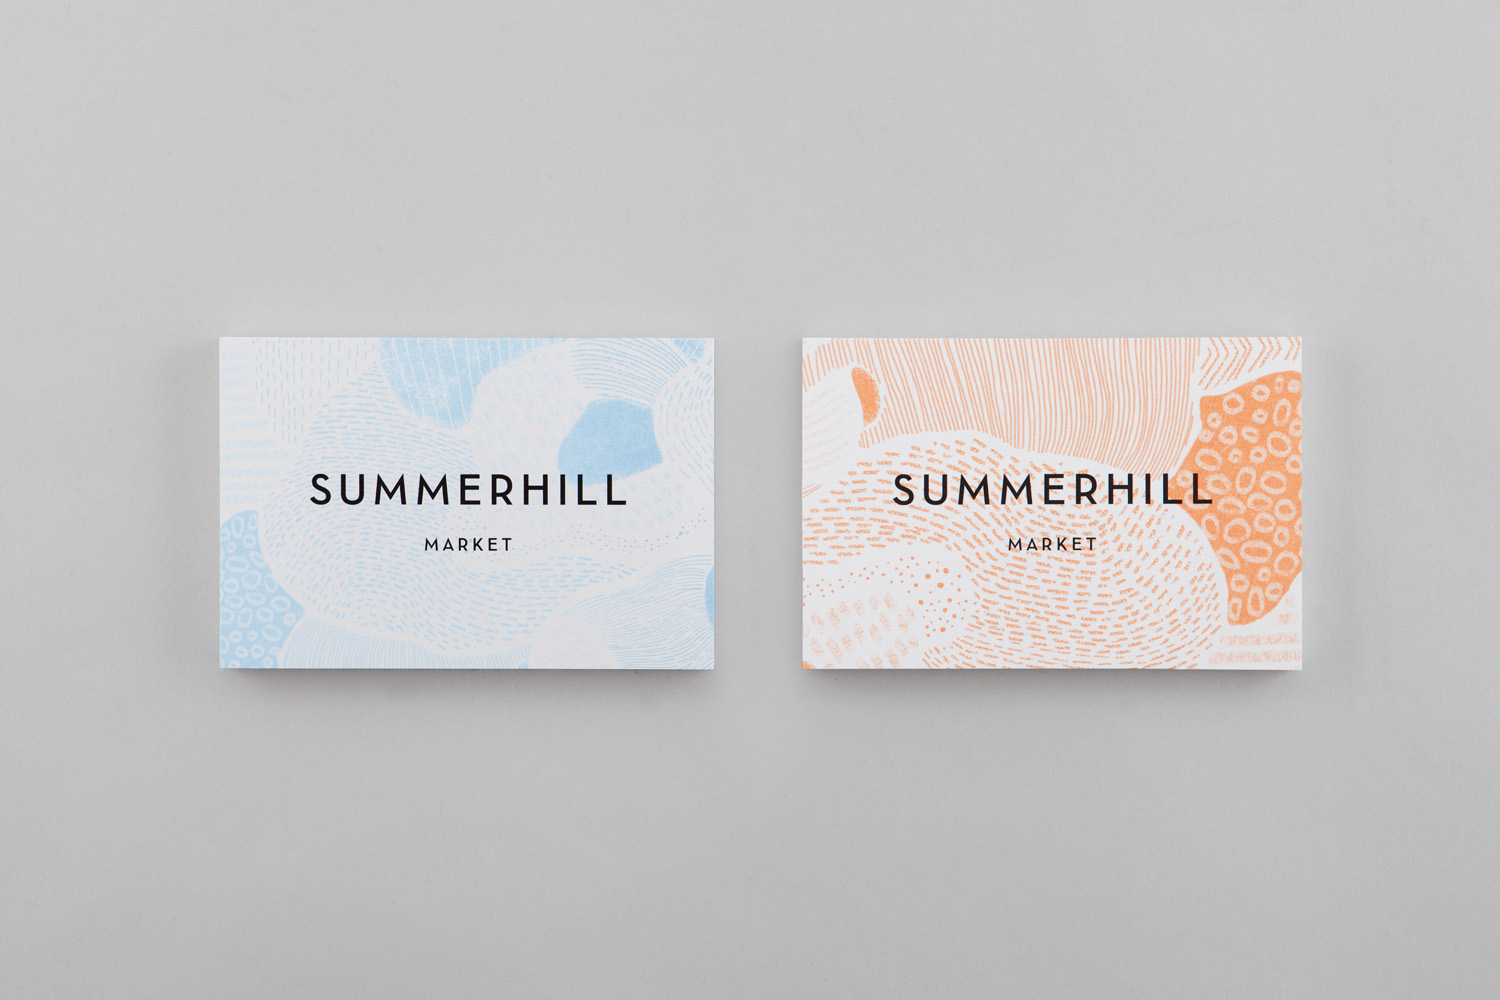 Business Card Design Ideas – Summerhill Market by Blok, Canada